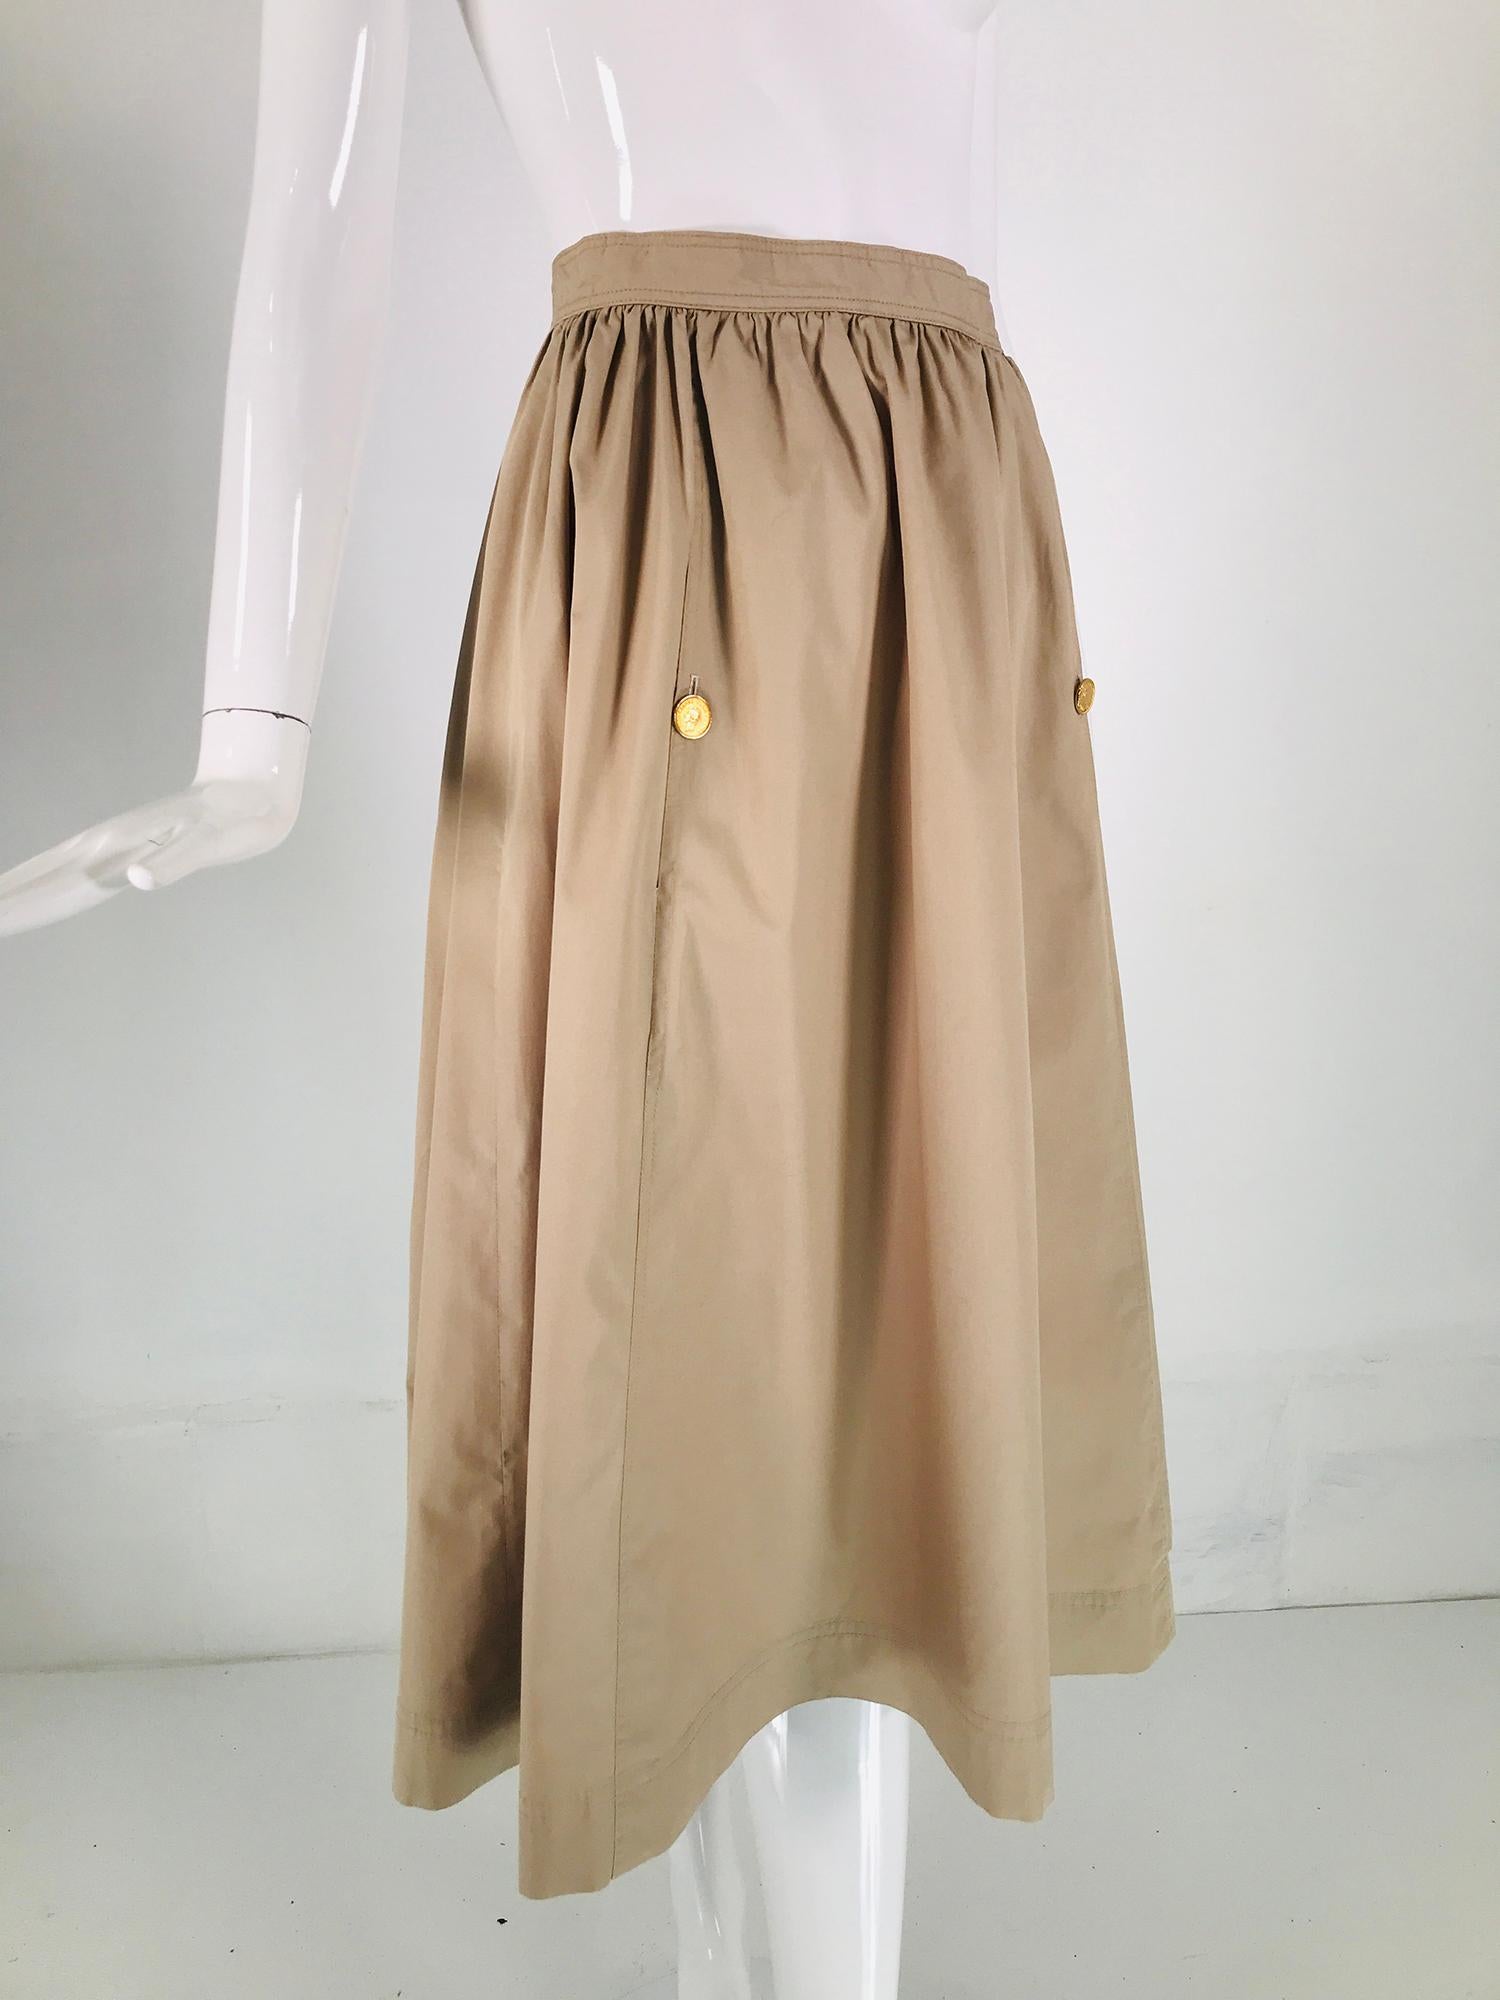 long tan skirt